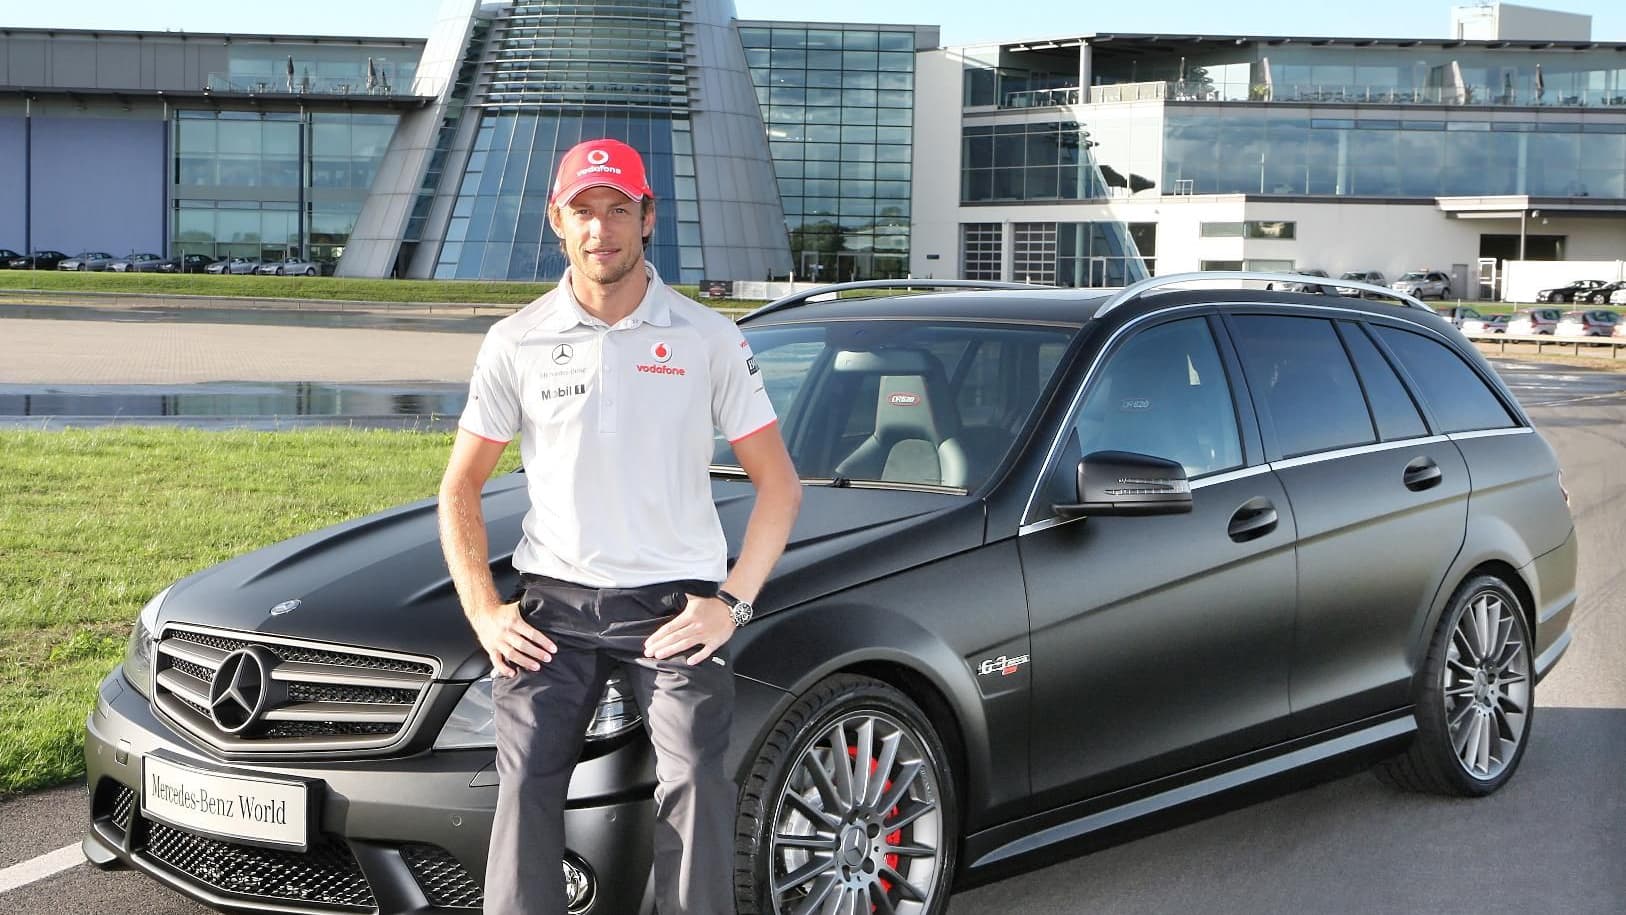 F1 Champ Jenson Button with Mercedes-Benz C-Class DR 520 Estate (Source: Mercedes)